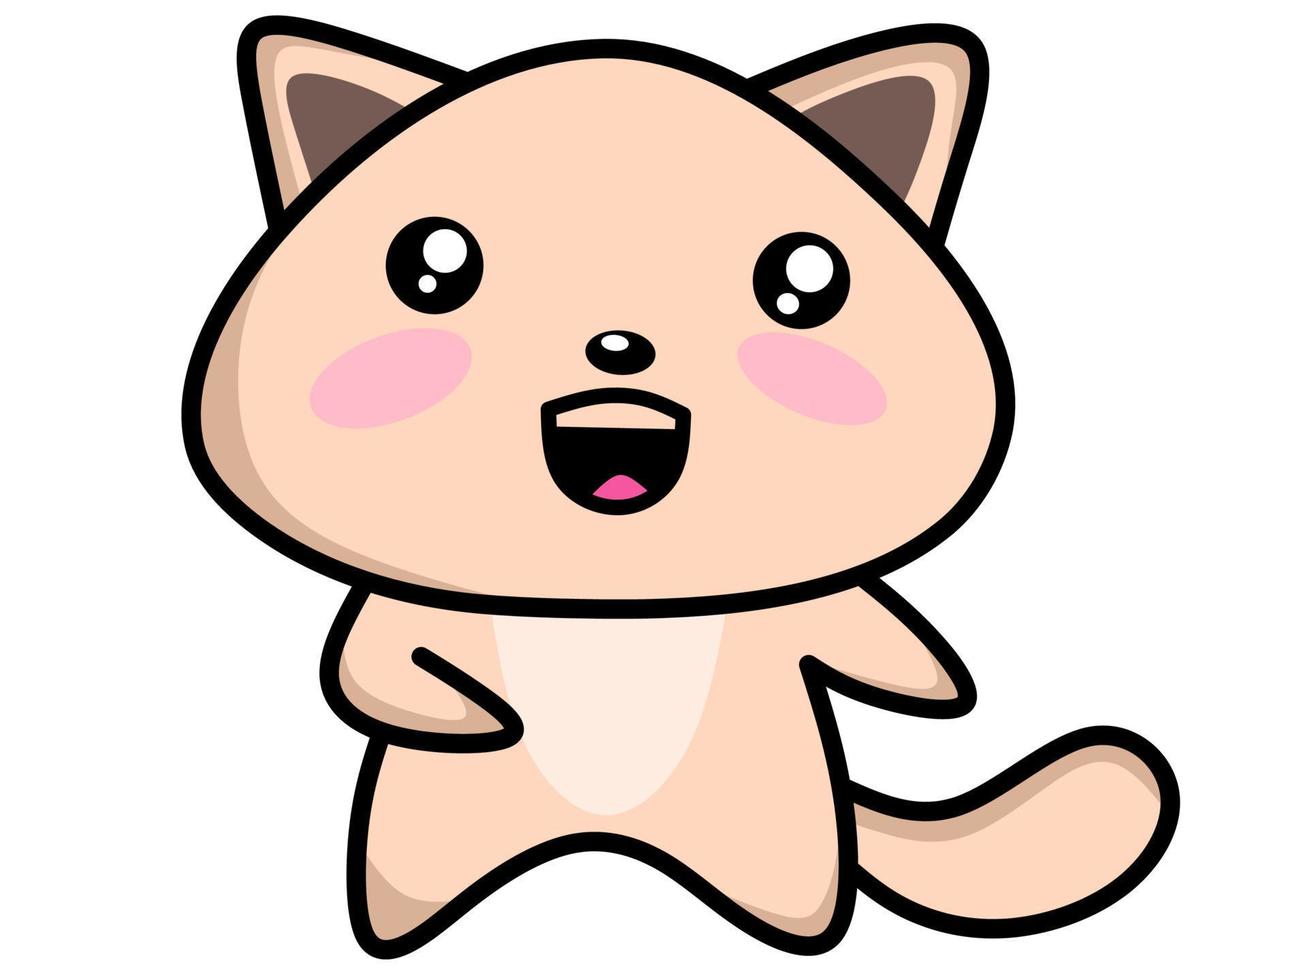 Cute cat character kawaii style vector